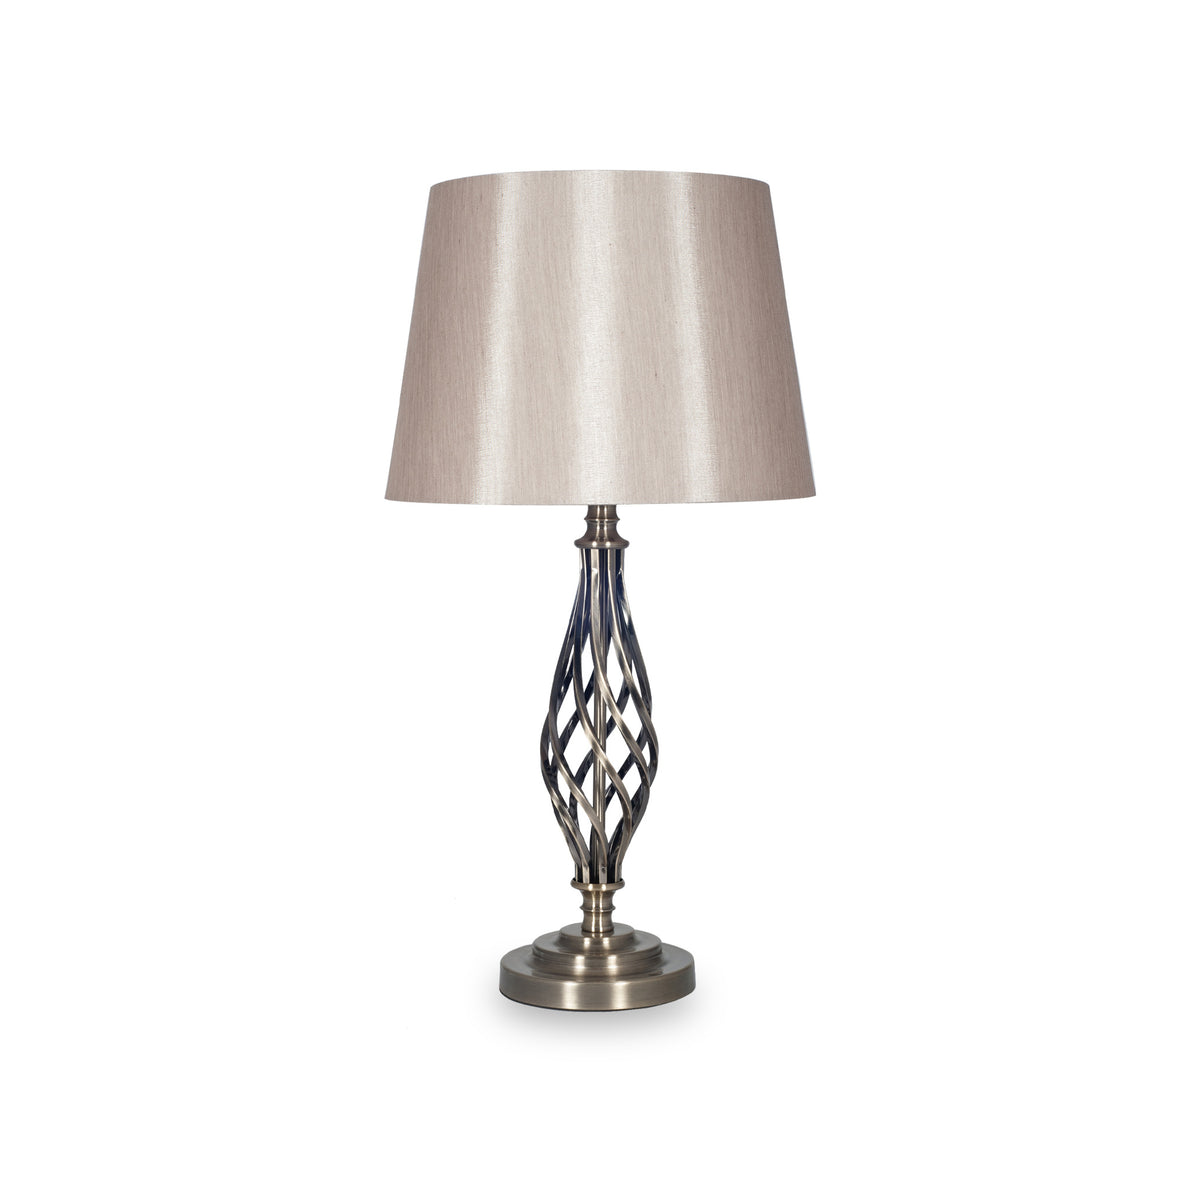 Jenna Silver Metal Twist Detail Table Lamp from Roseland FurnitureJenna Silver Metal Twist Detail Table Lamp from Roseland Furniture